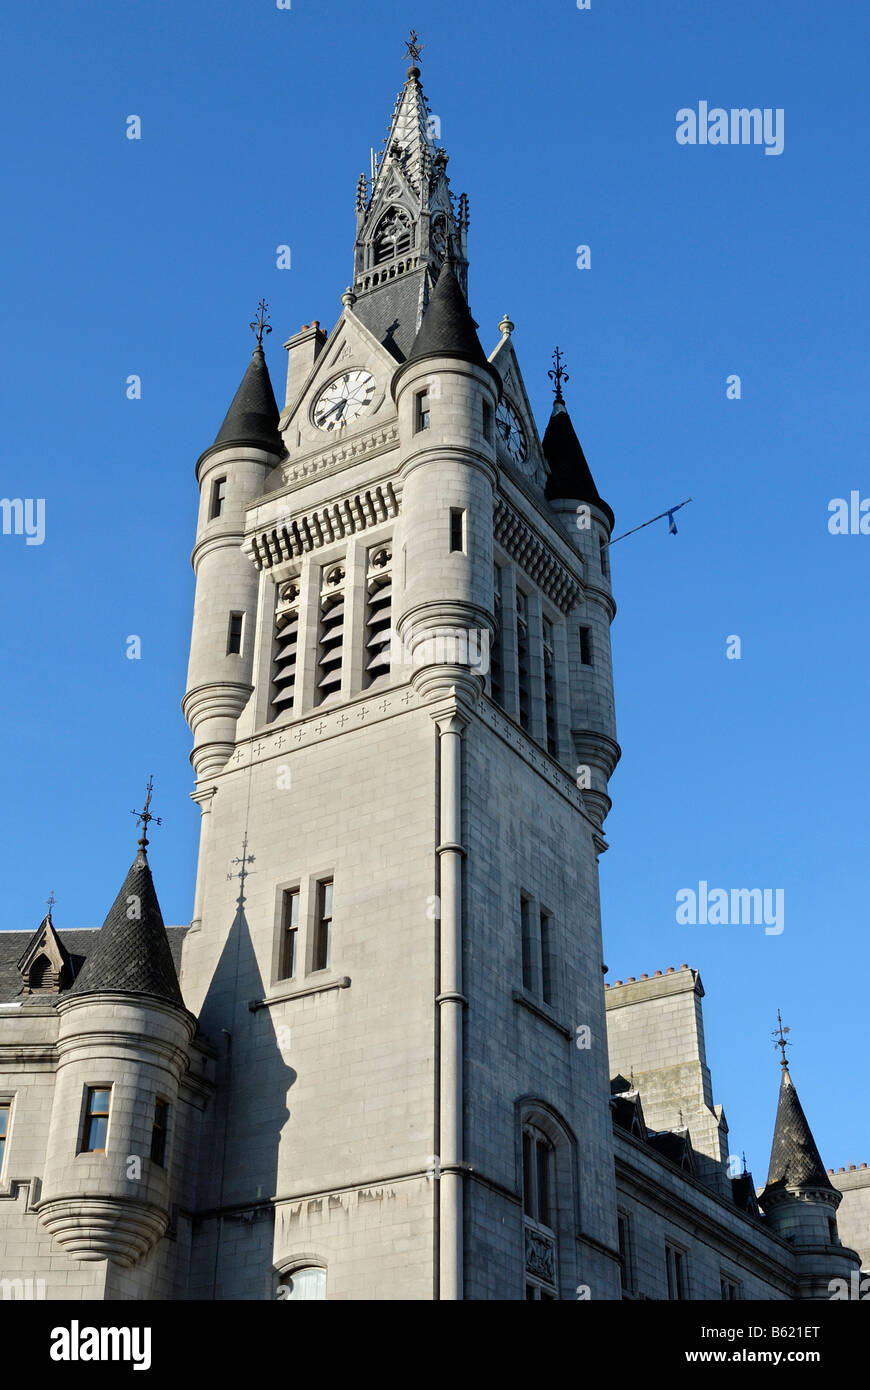 Town House Clock Tower, Aberdeen, Scotland, Great Britain, Europe Stock Photo